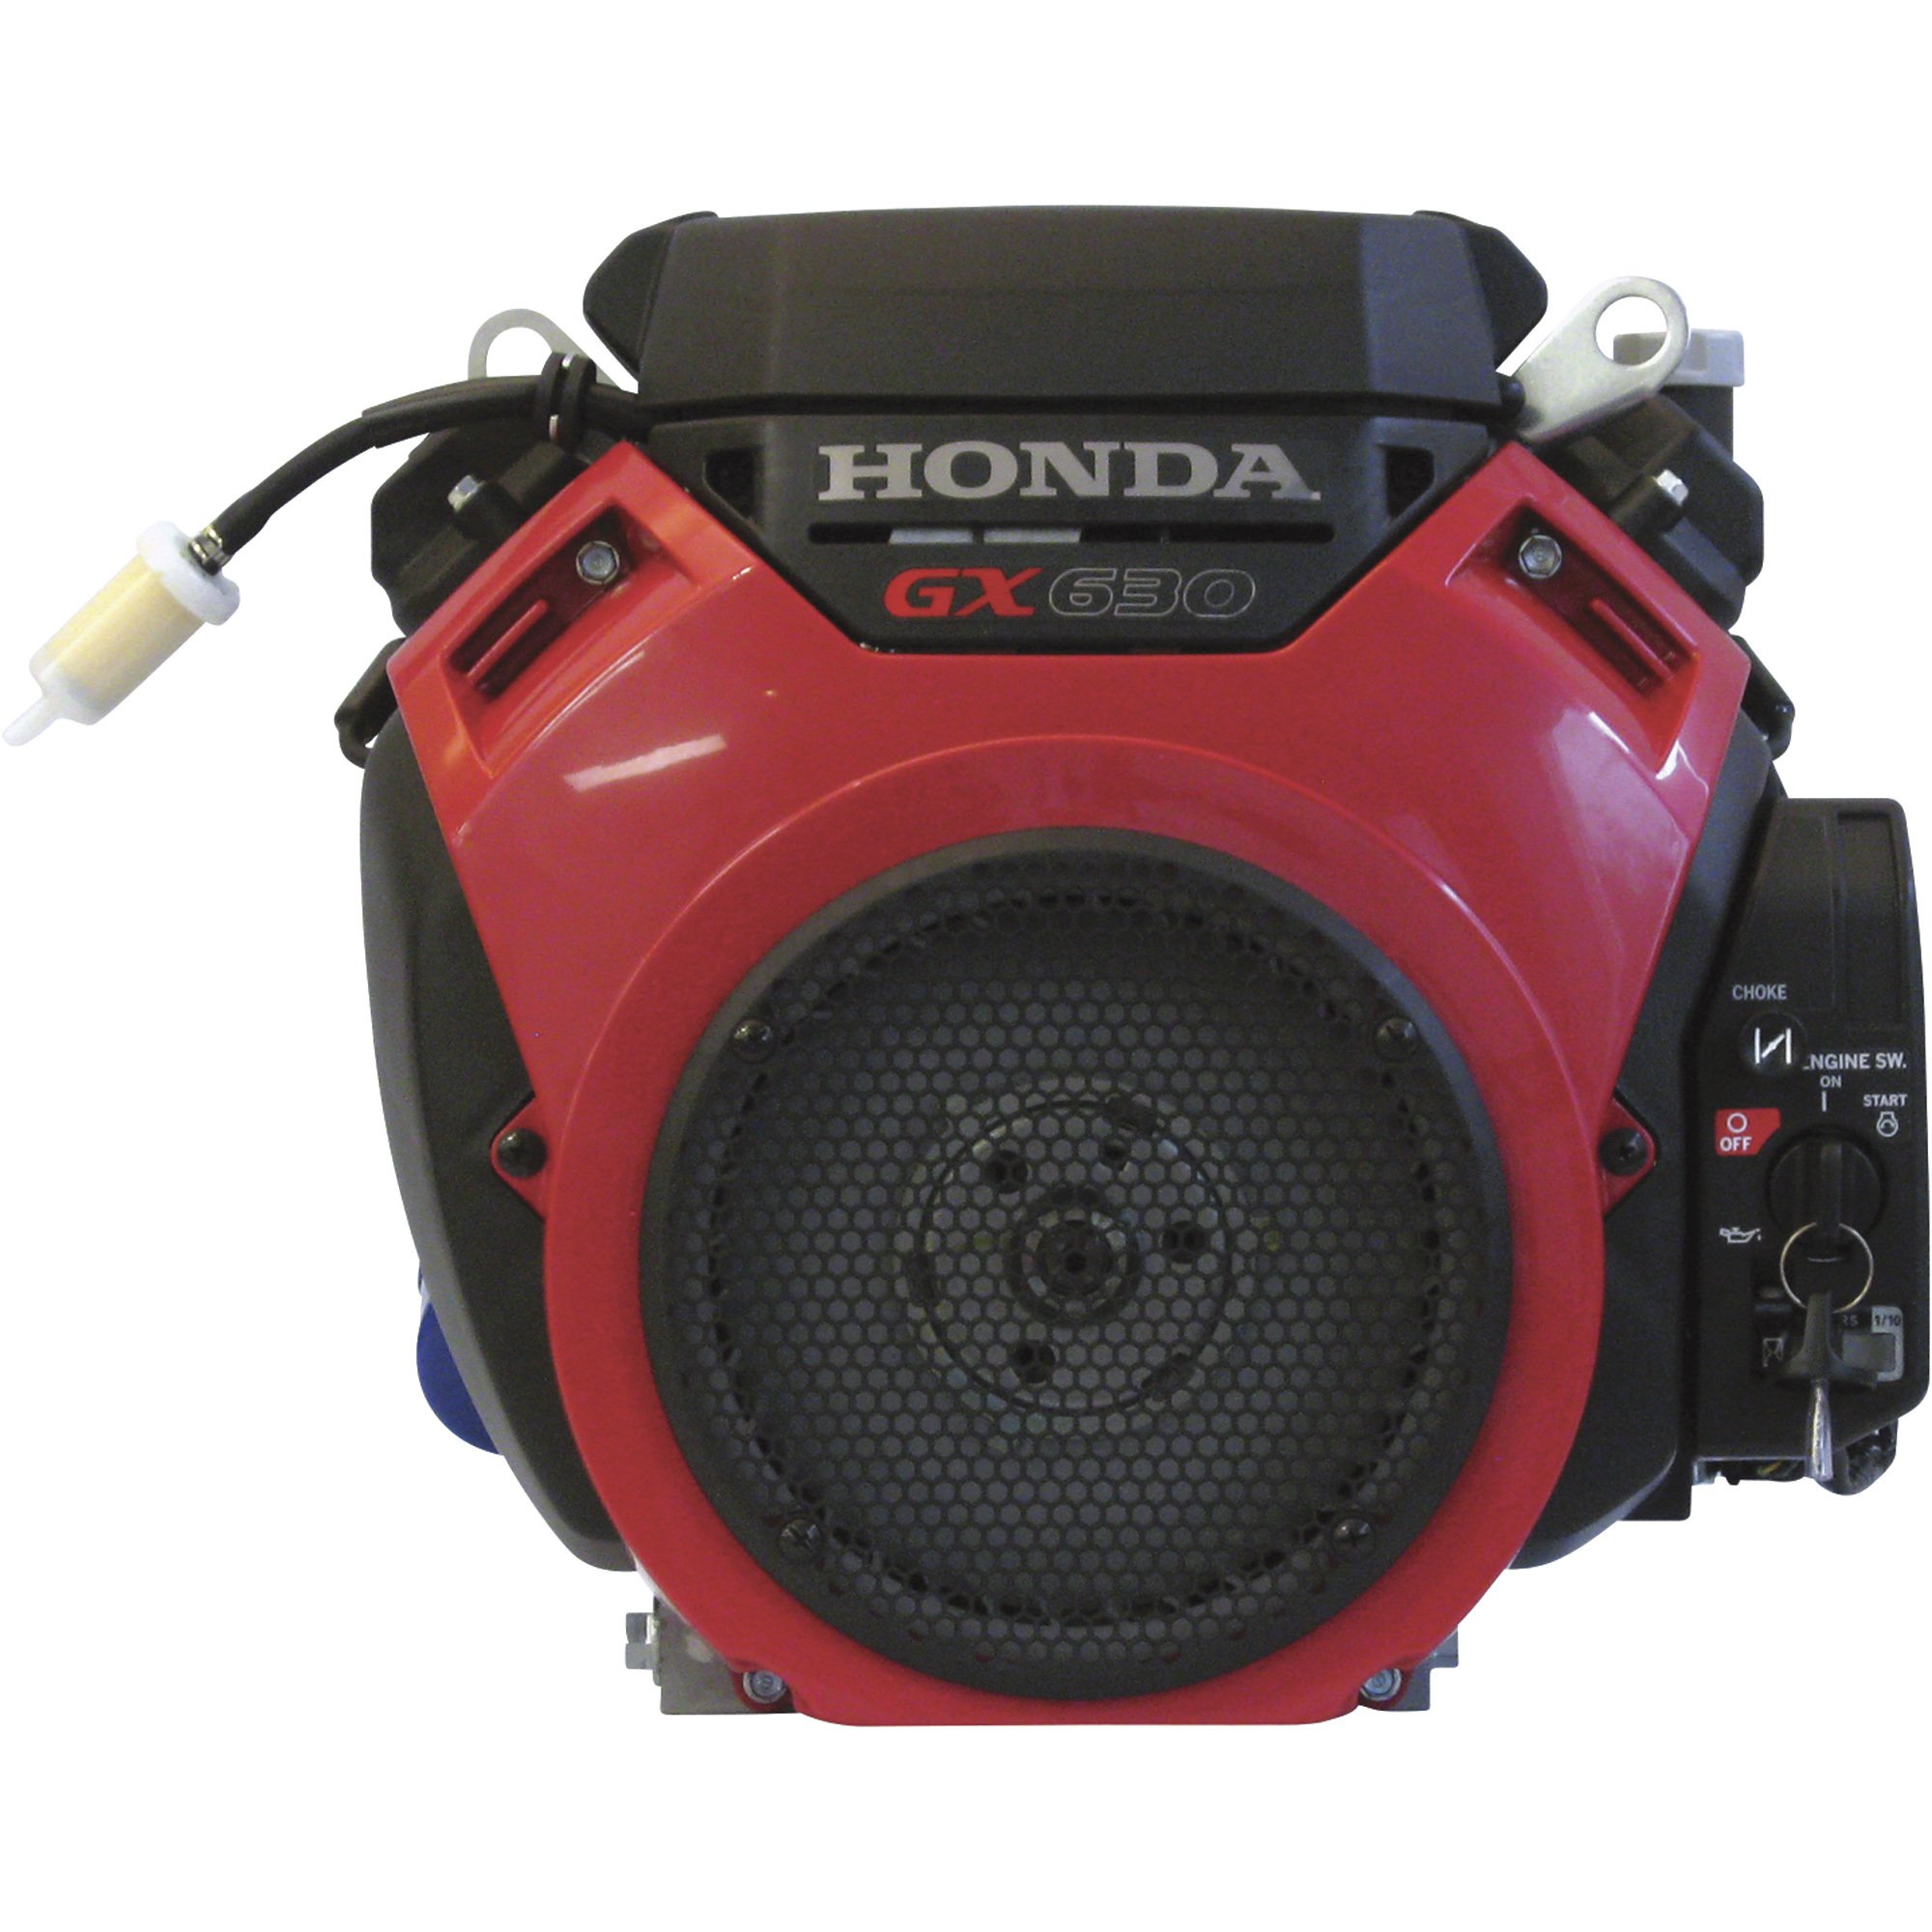 Honda V-Twin Horizontal OHV Engine with Electric Start — 688cc, GX Series,  Model# GX630RHVXE1